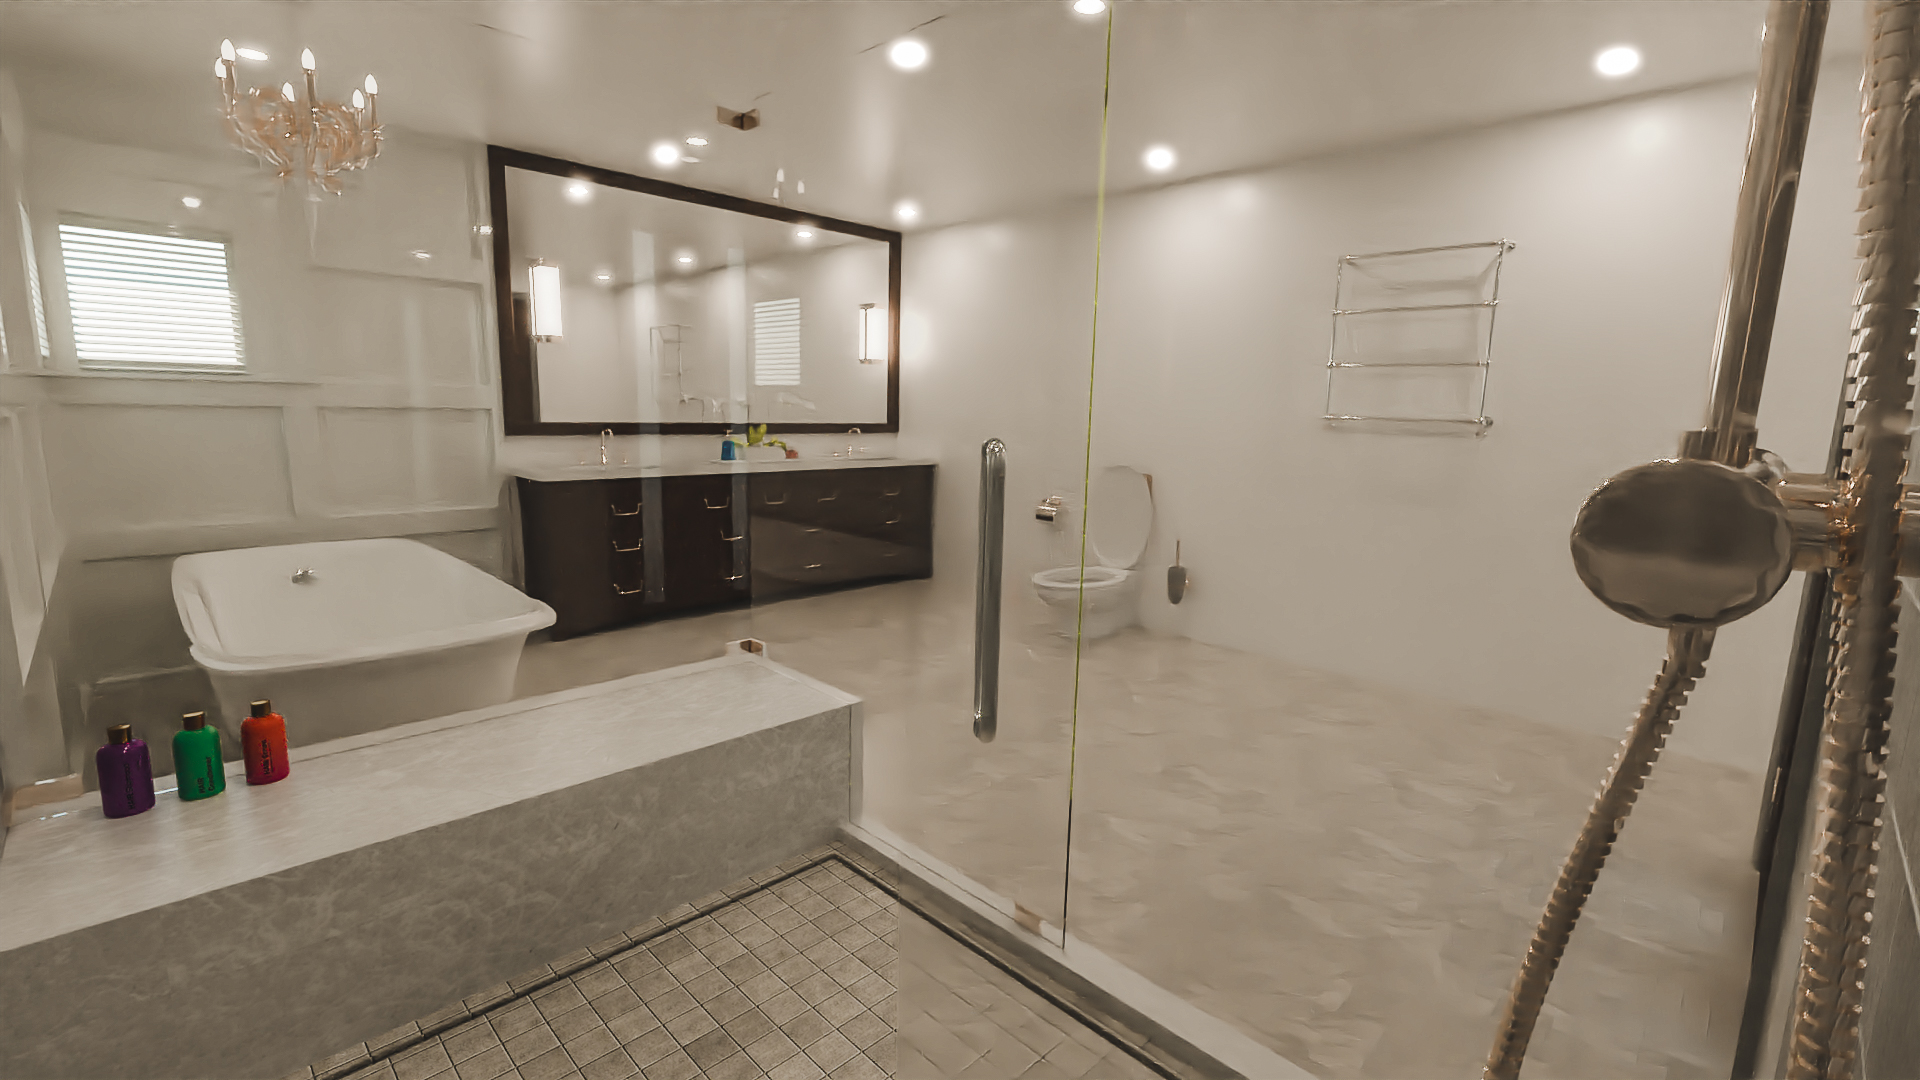 TS Classic Bathroom 01 by: Tesla3dCorp, 3D Models by Daz 3D